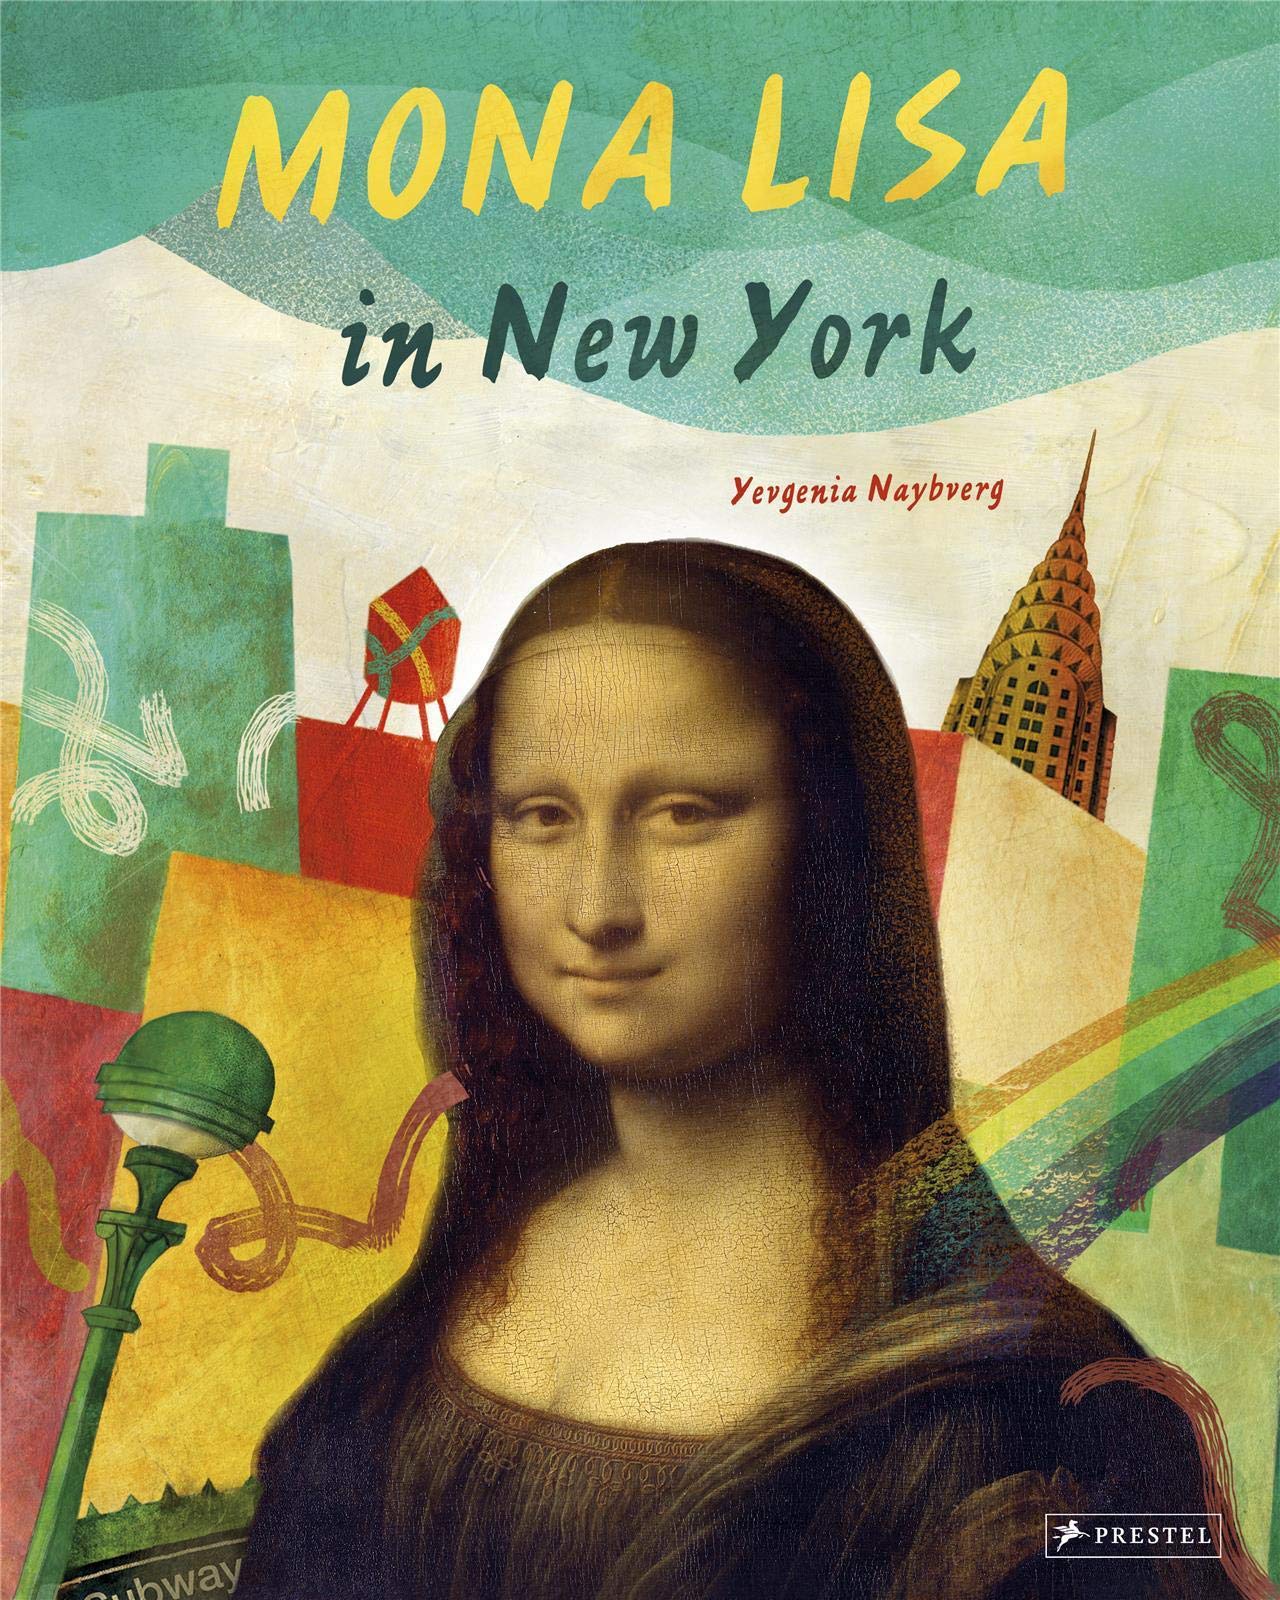 Mona Lisa in New York